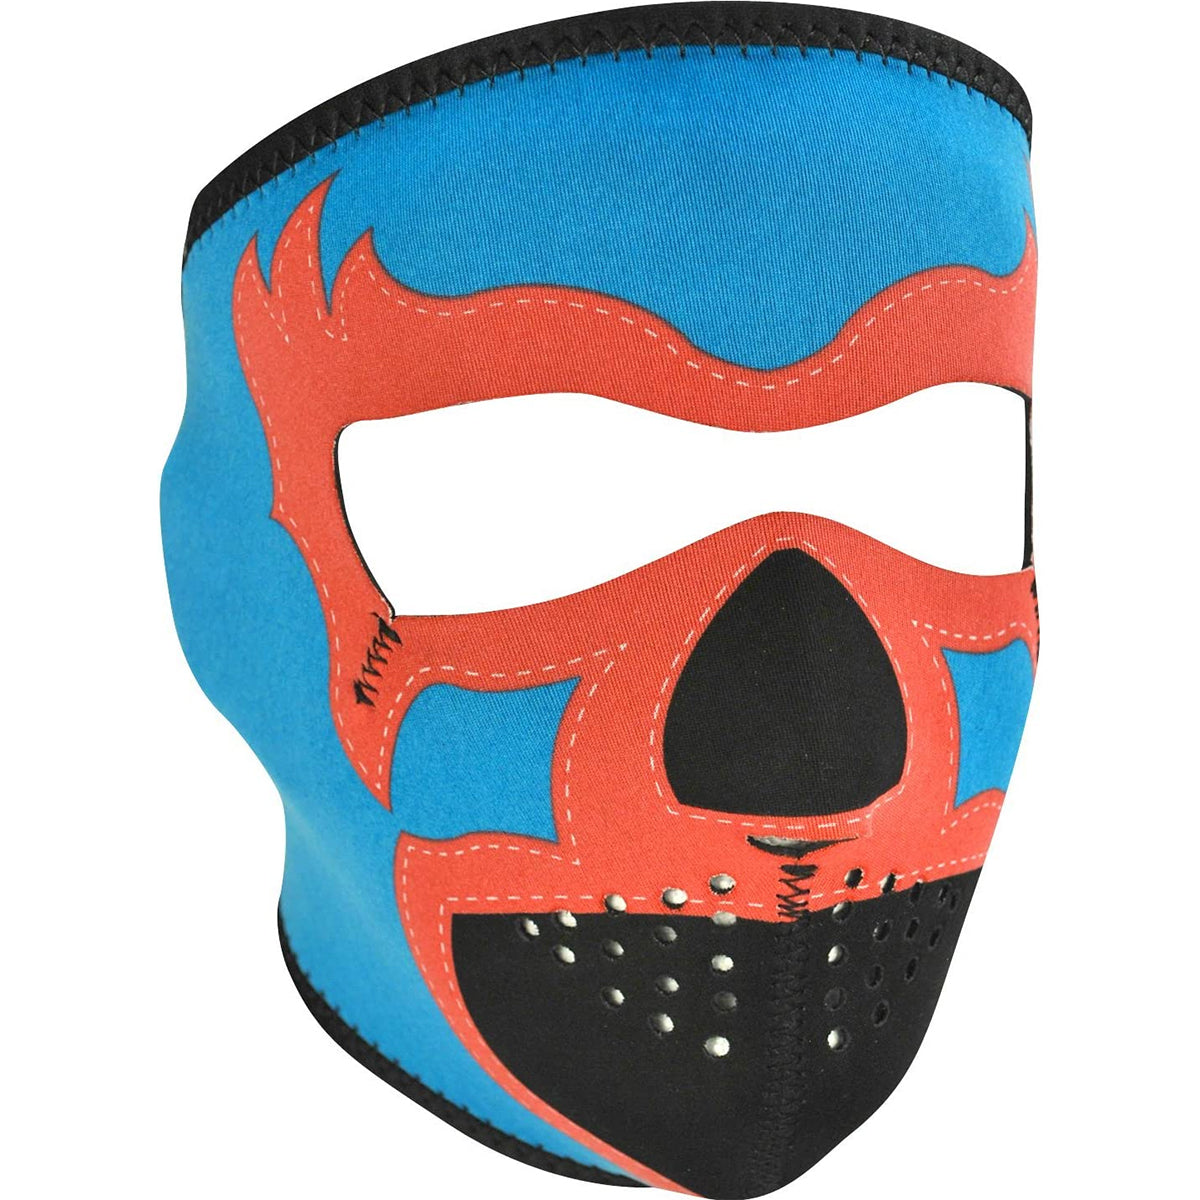 Zan Headgear Lucha Libre Neoprene Full Adult Face Mask Brand New-WNFM073